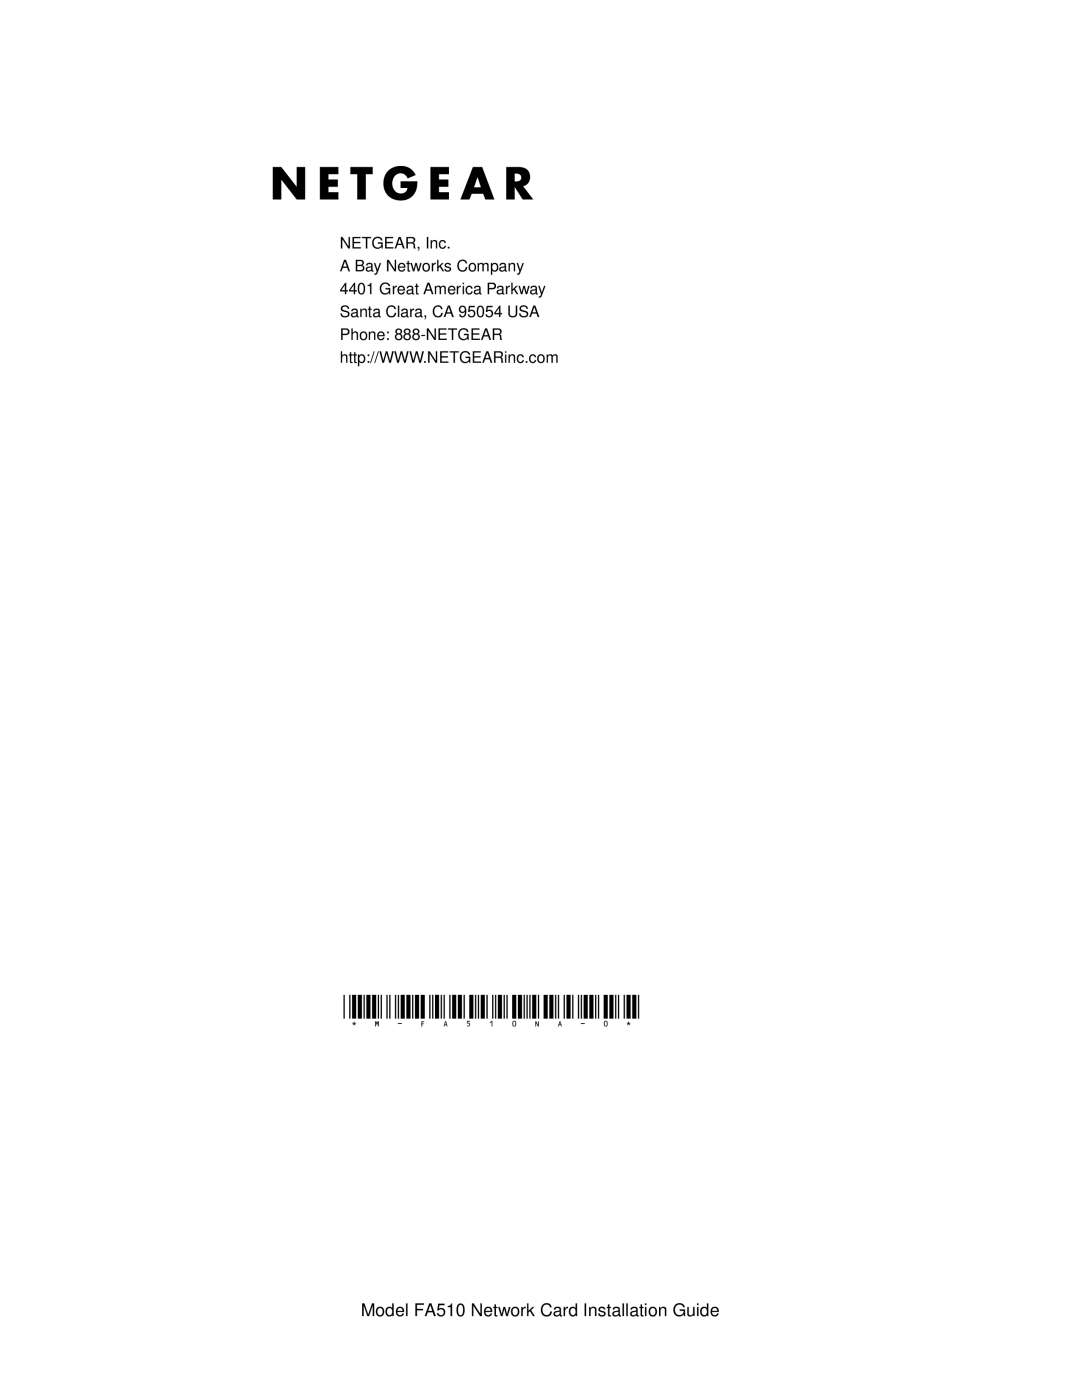 NETGEAR manual m-FA510NA-0, Model FA510 Network Card Installation Guide, NETGEAR, Inc 